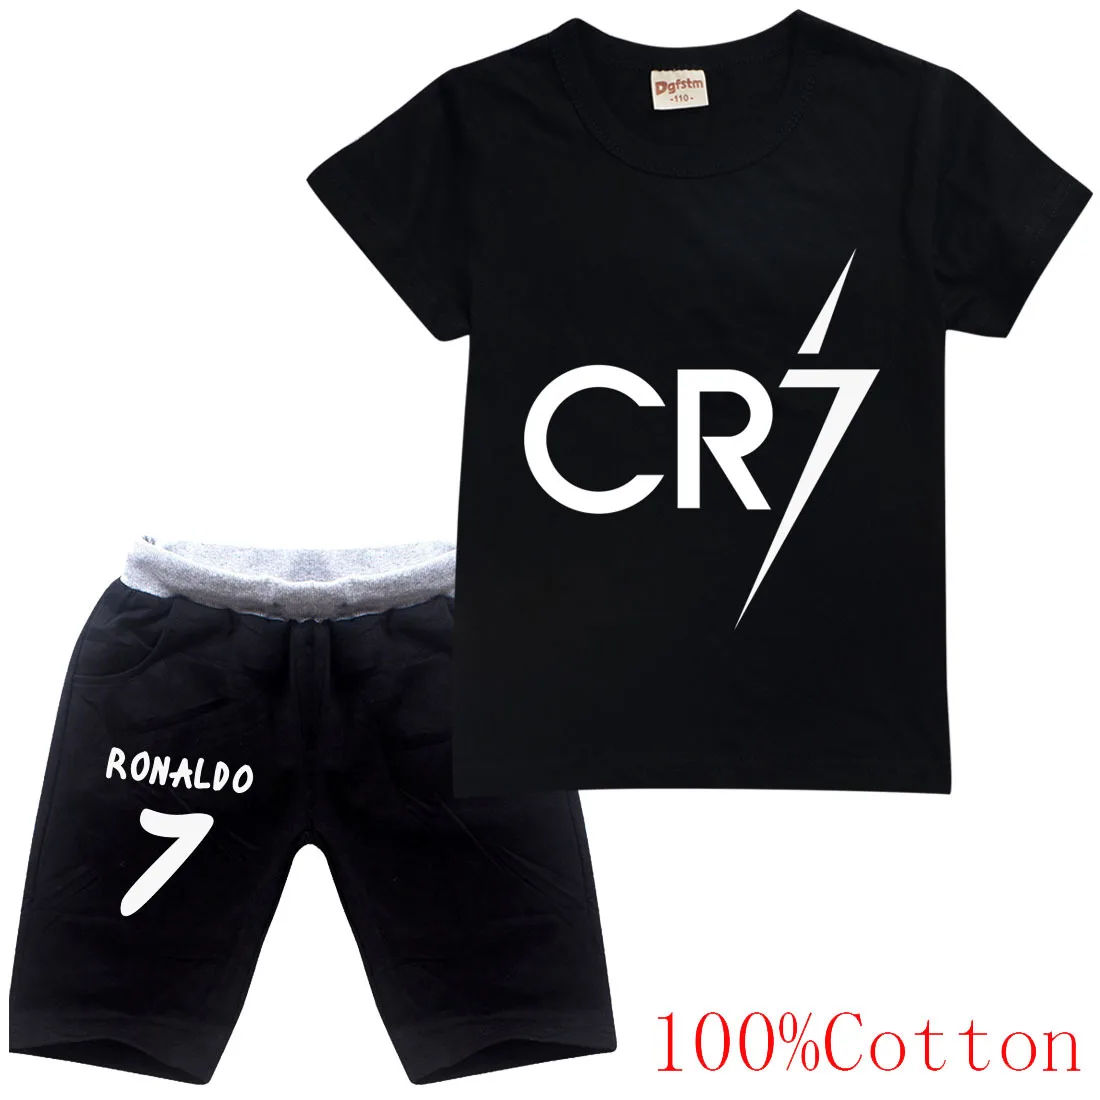 Cotton Summer Baby Children Soft Shorts Suit t-shirt Star Boy Girl kids Ronaldo CR7 cartoon infant clothes cheap stuff for 2-15Y |